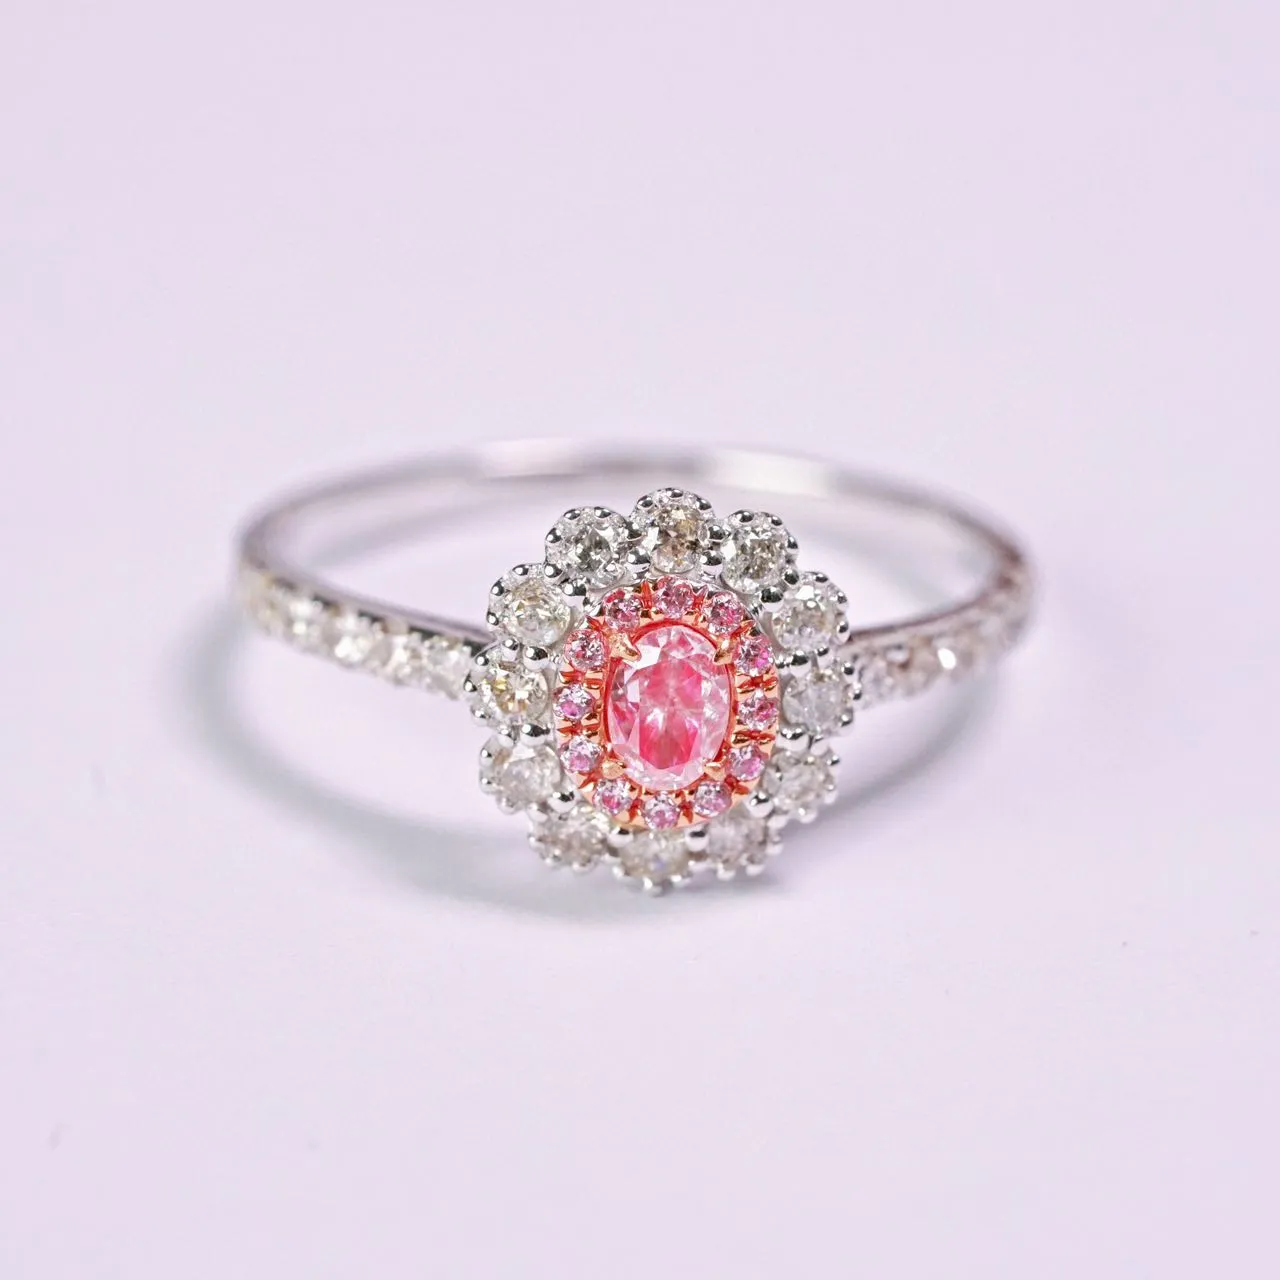 Women's Jewelry ring 0.18ct PINK diamond 0.5CT SUN FLOWER au750 18k white gold ENGAGEMENT